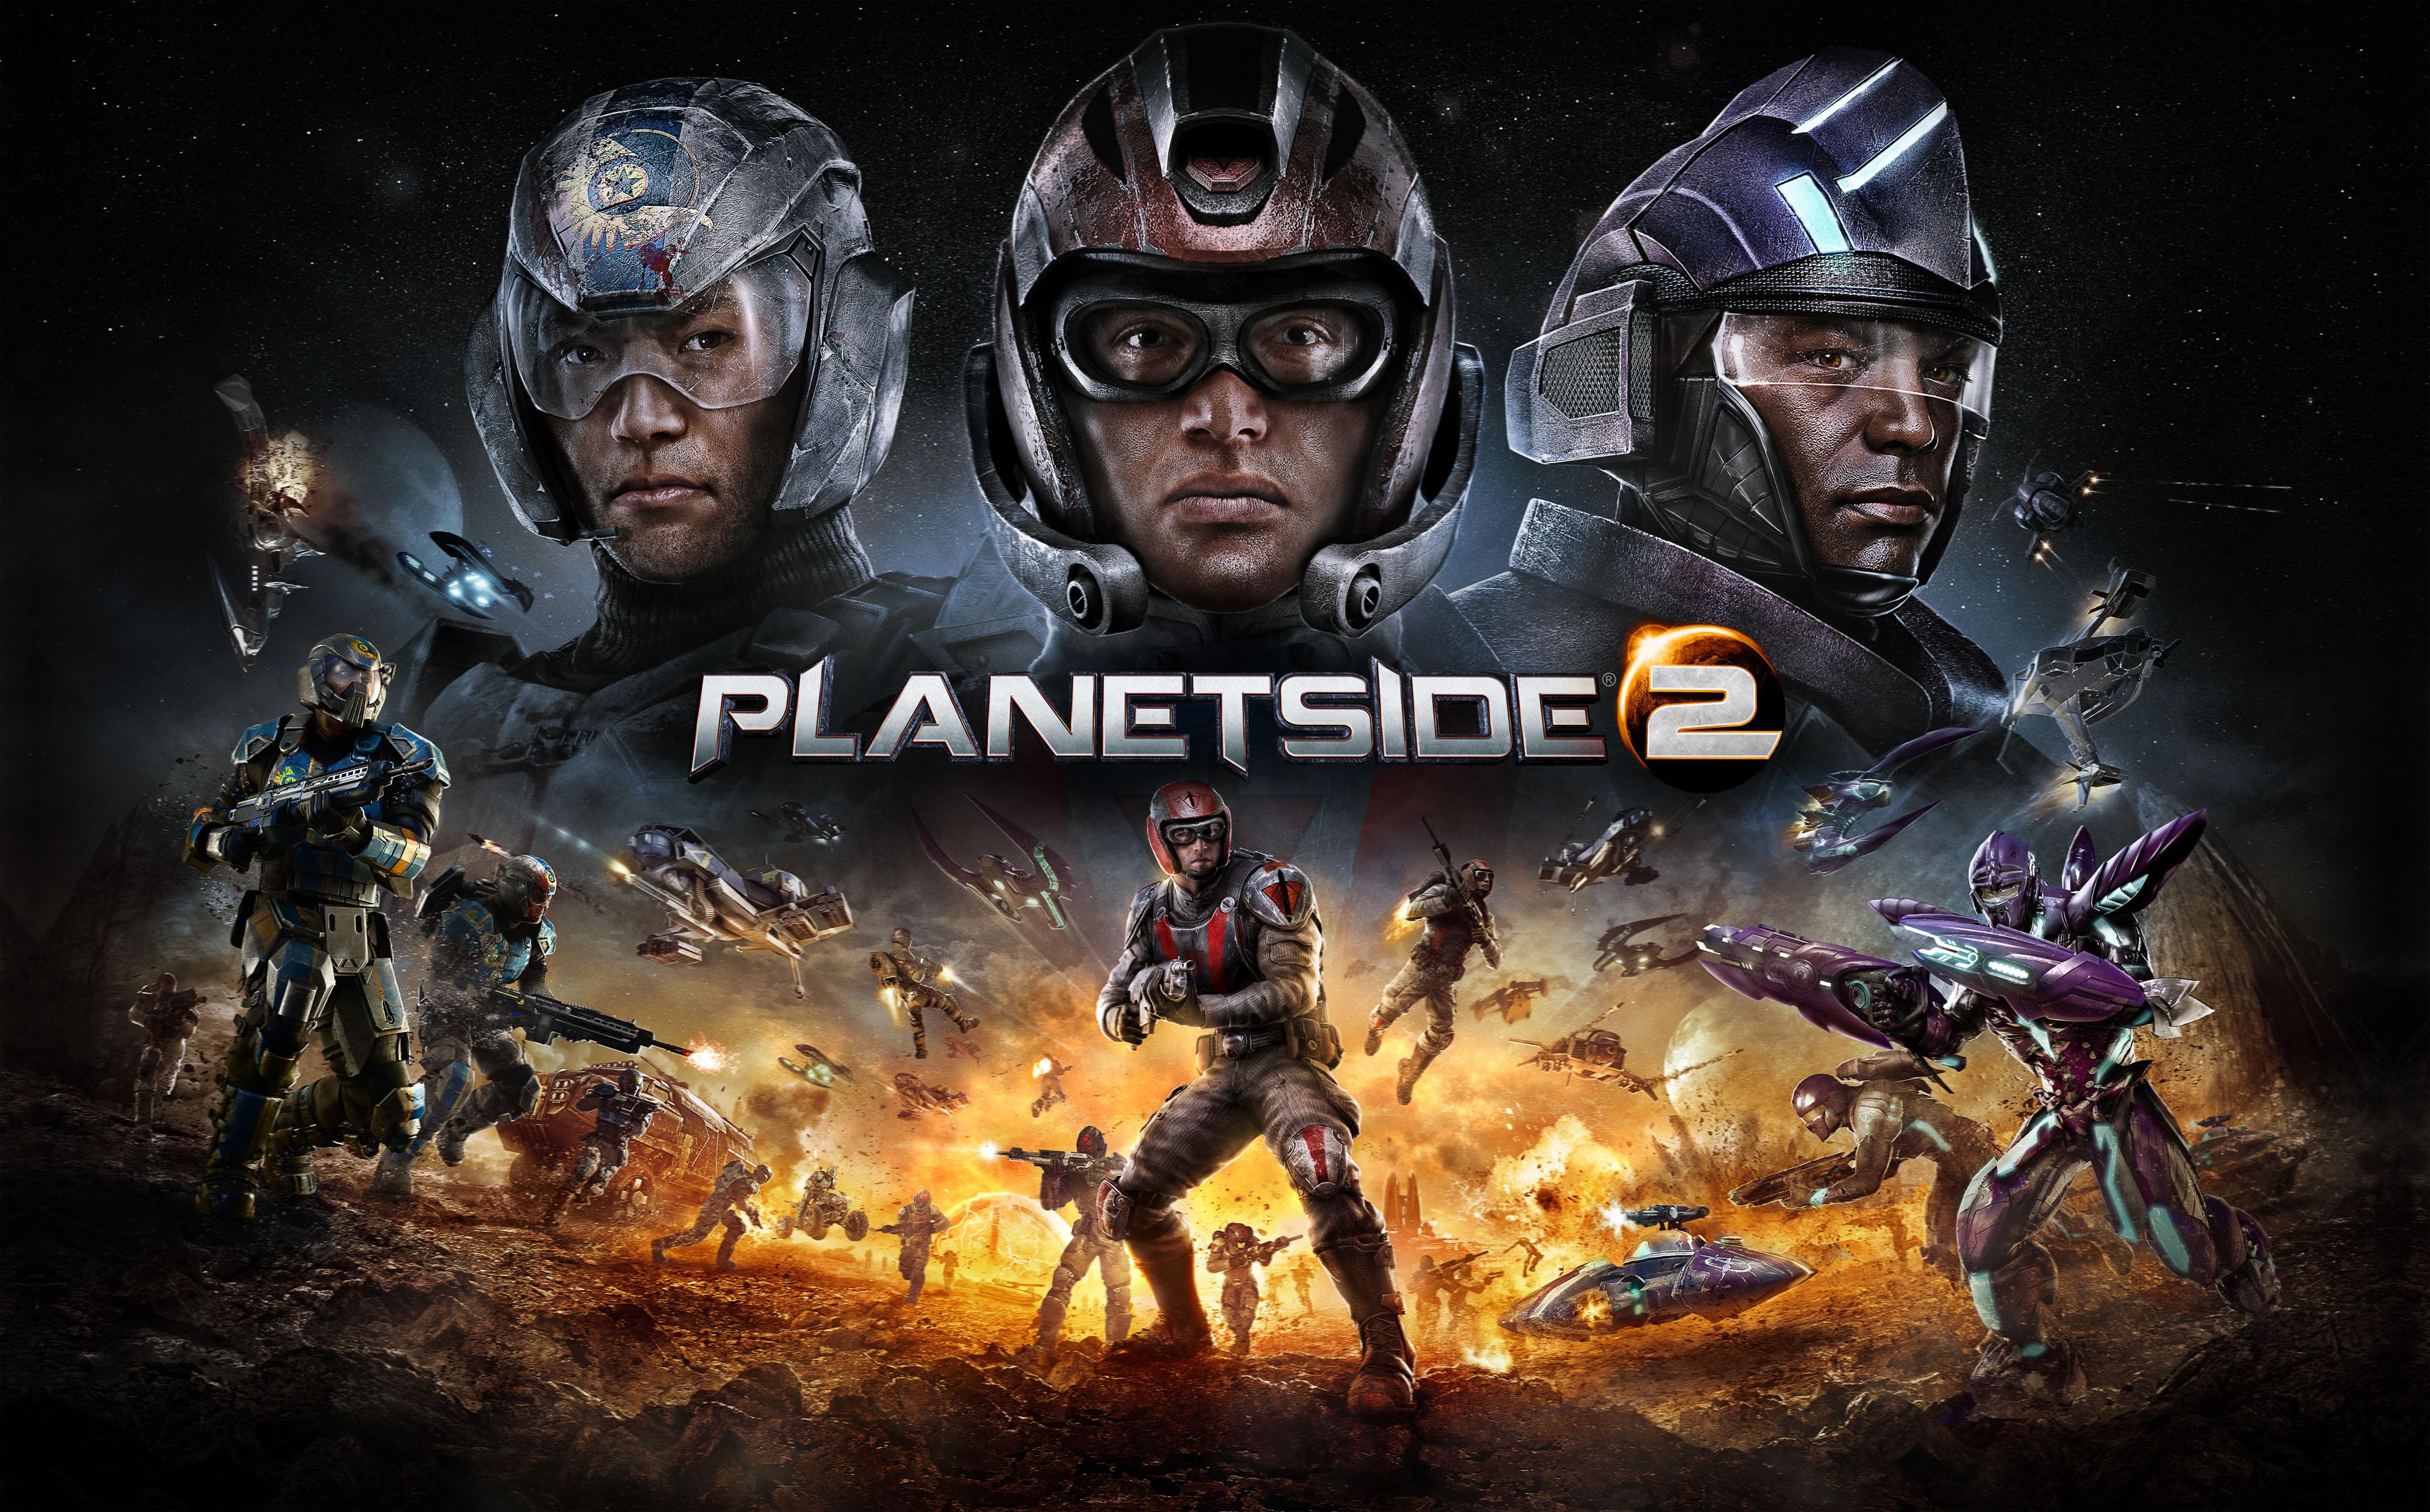 Planetside 2 is a massive three-way shooter